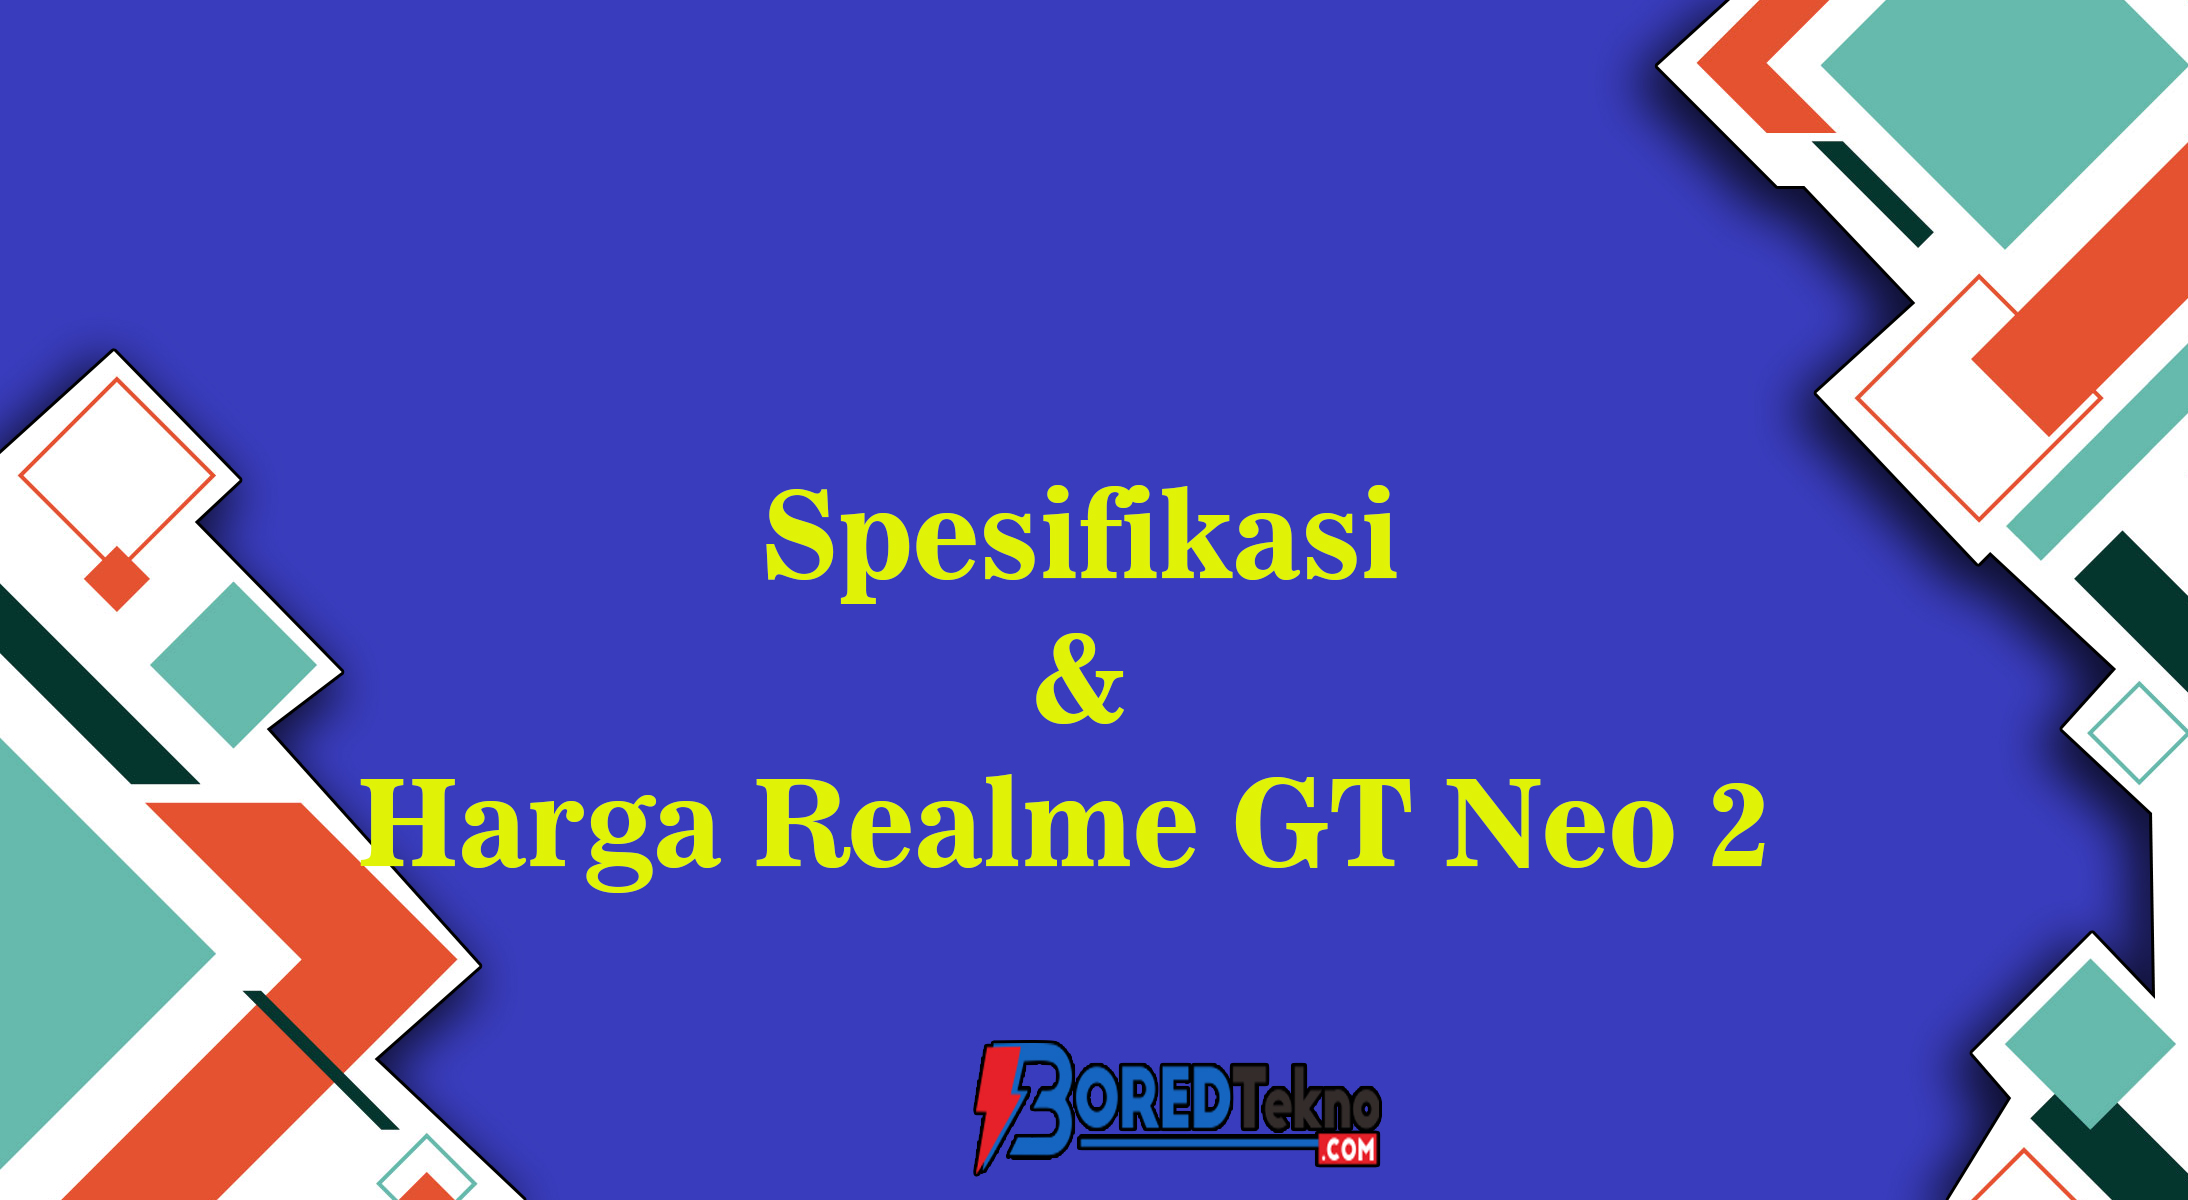 Spesifikasi & Harga Realme GT Neo 2